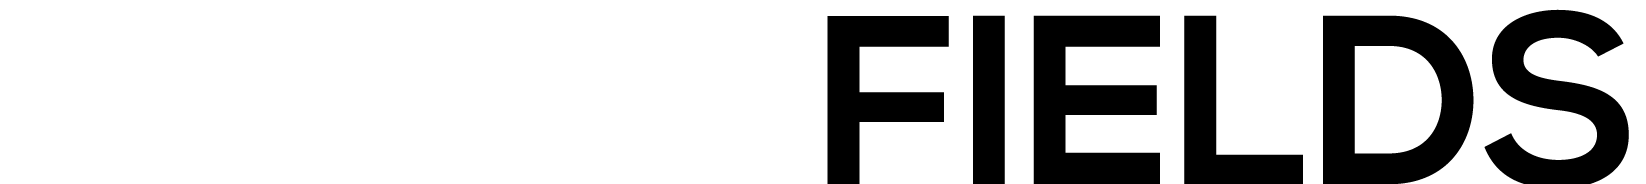 Logo-texte-Cyclofields-2